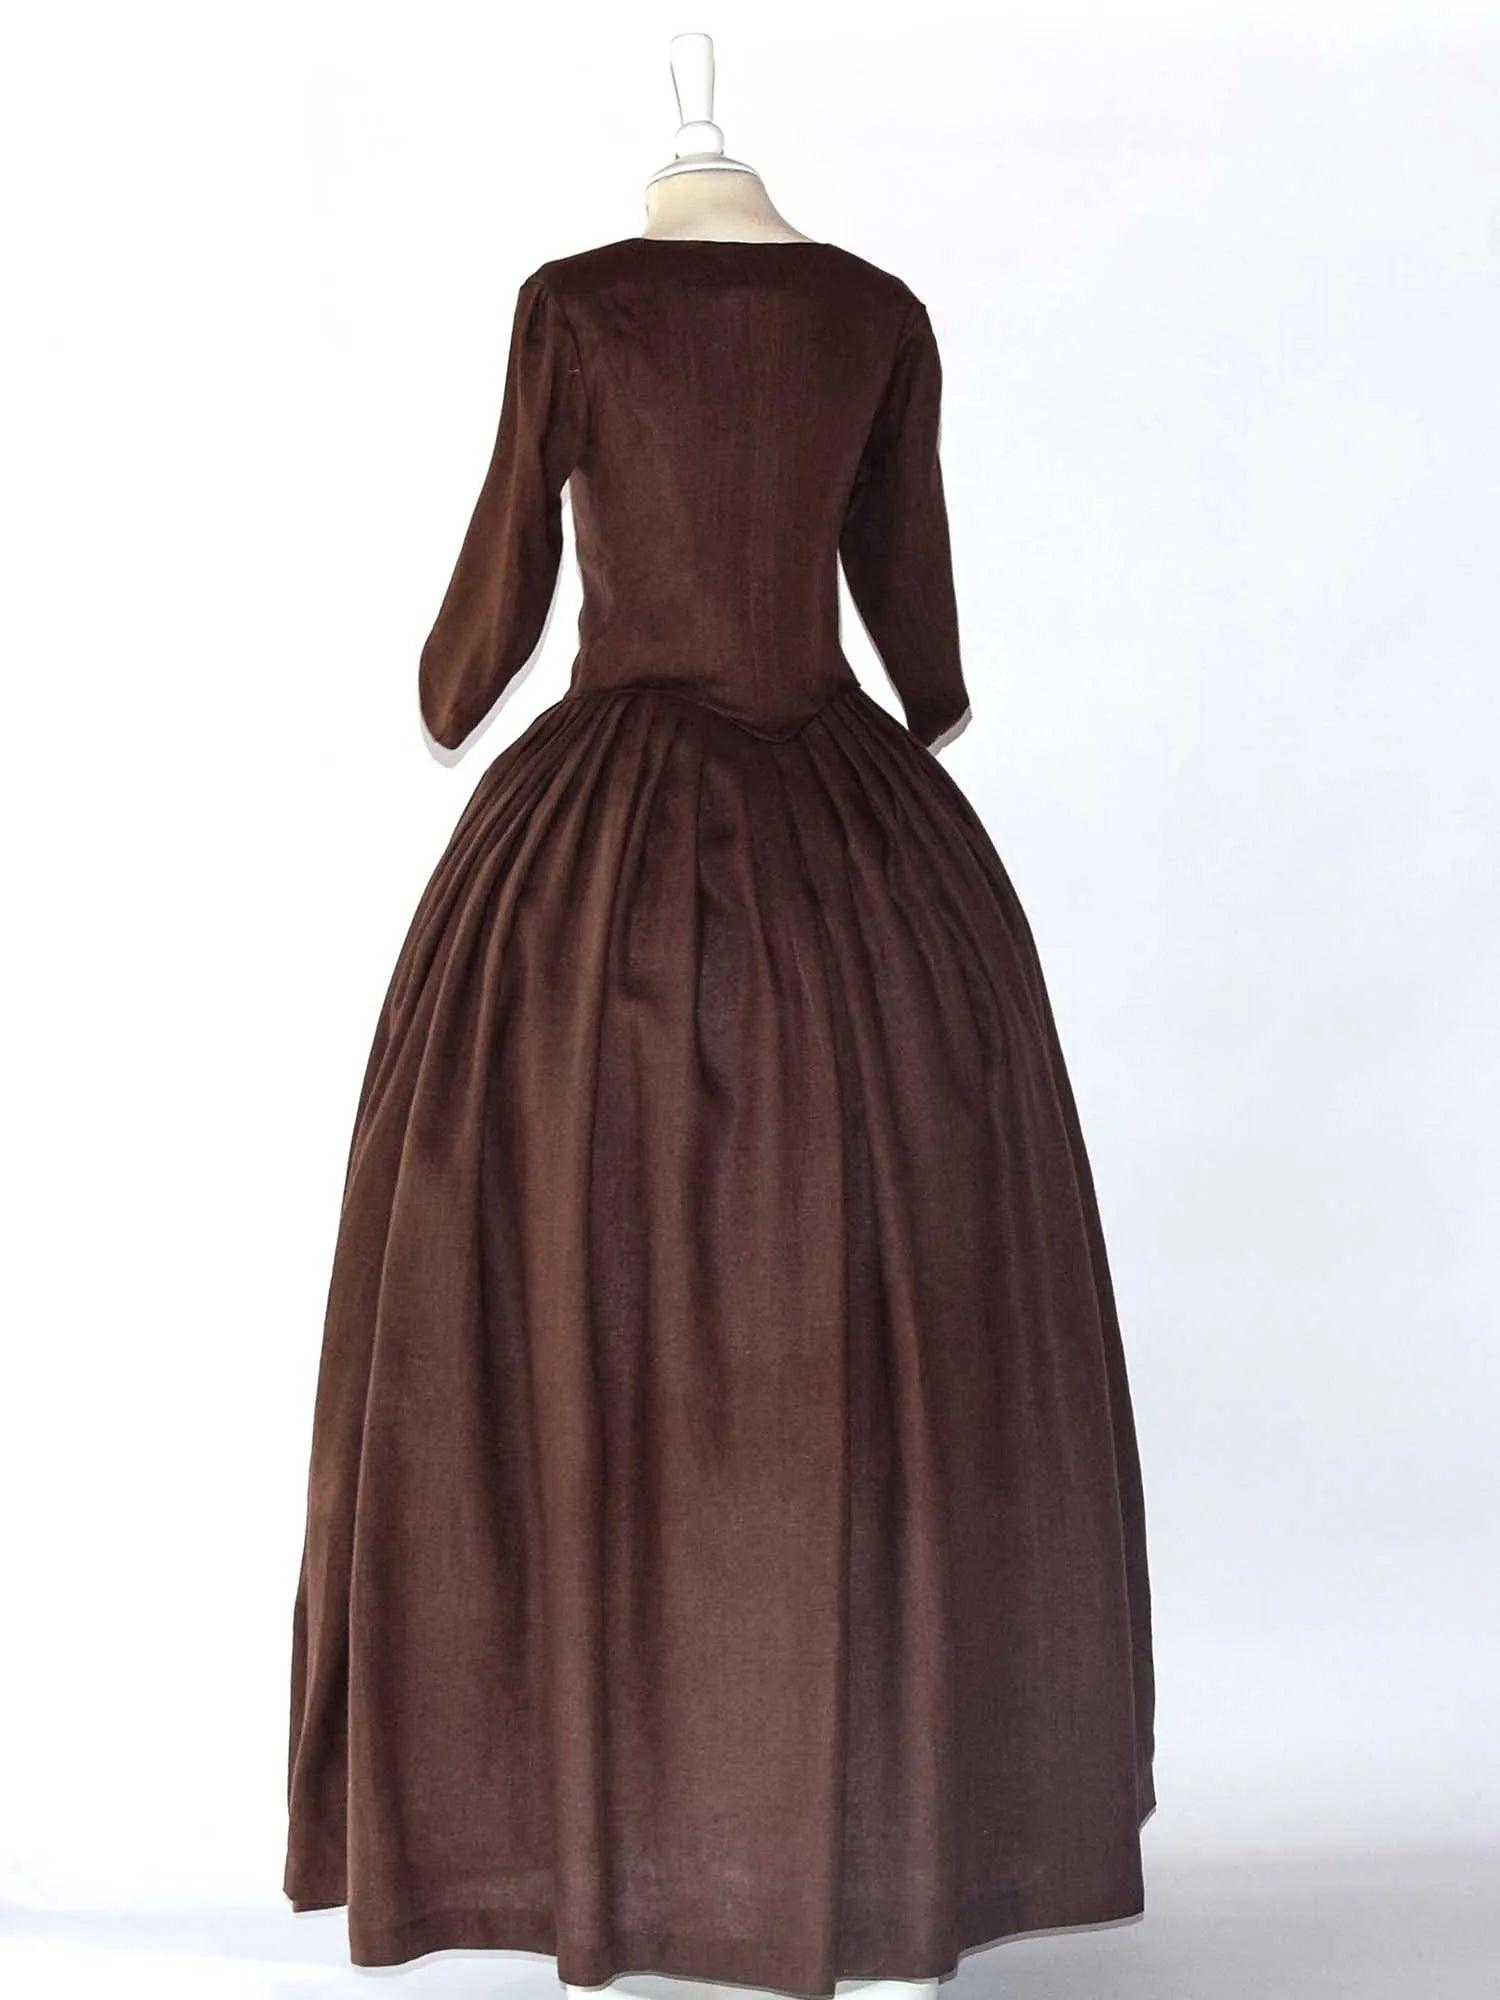 Historical Costume in Dark Brown Linen - Atelier Serraspina